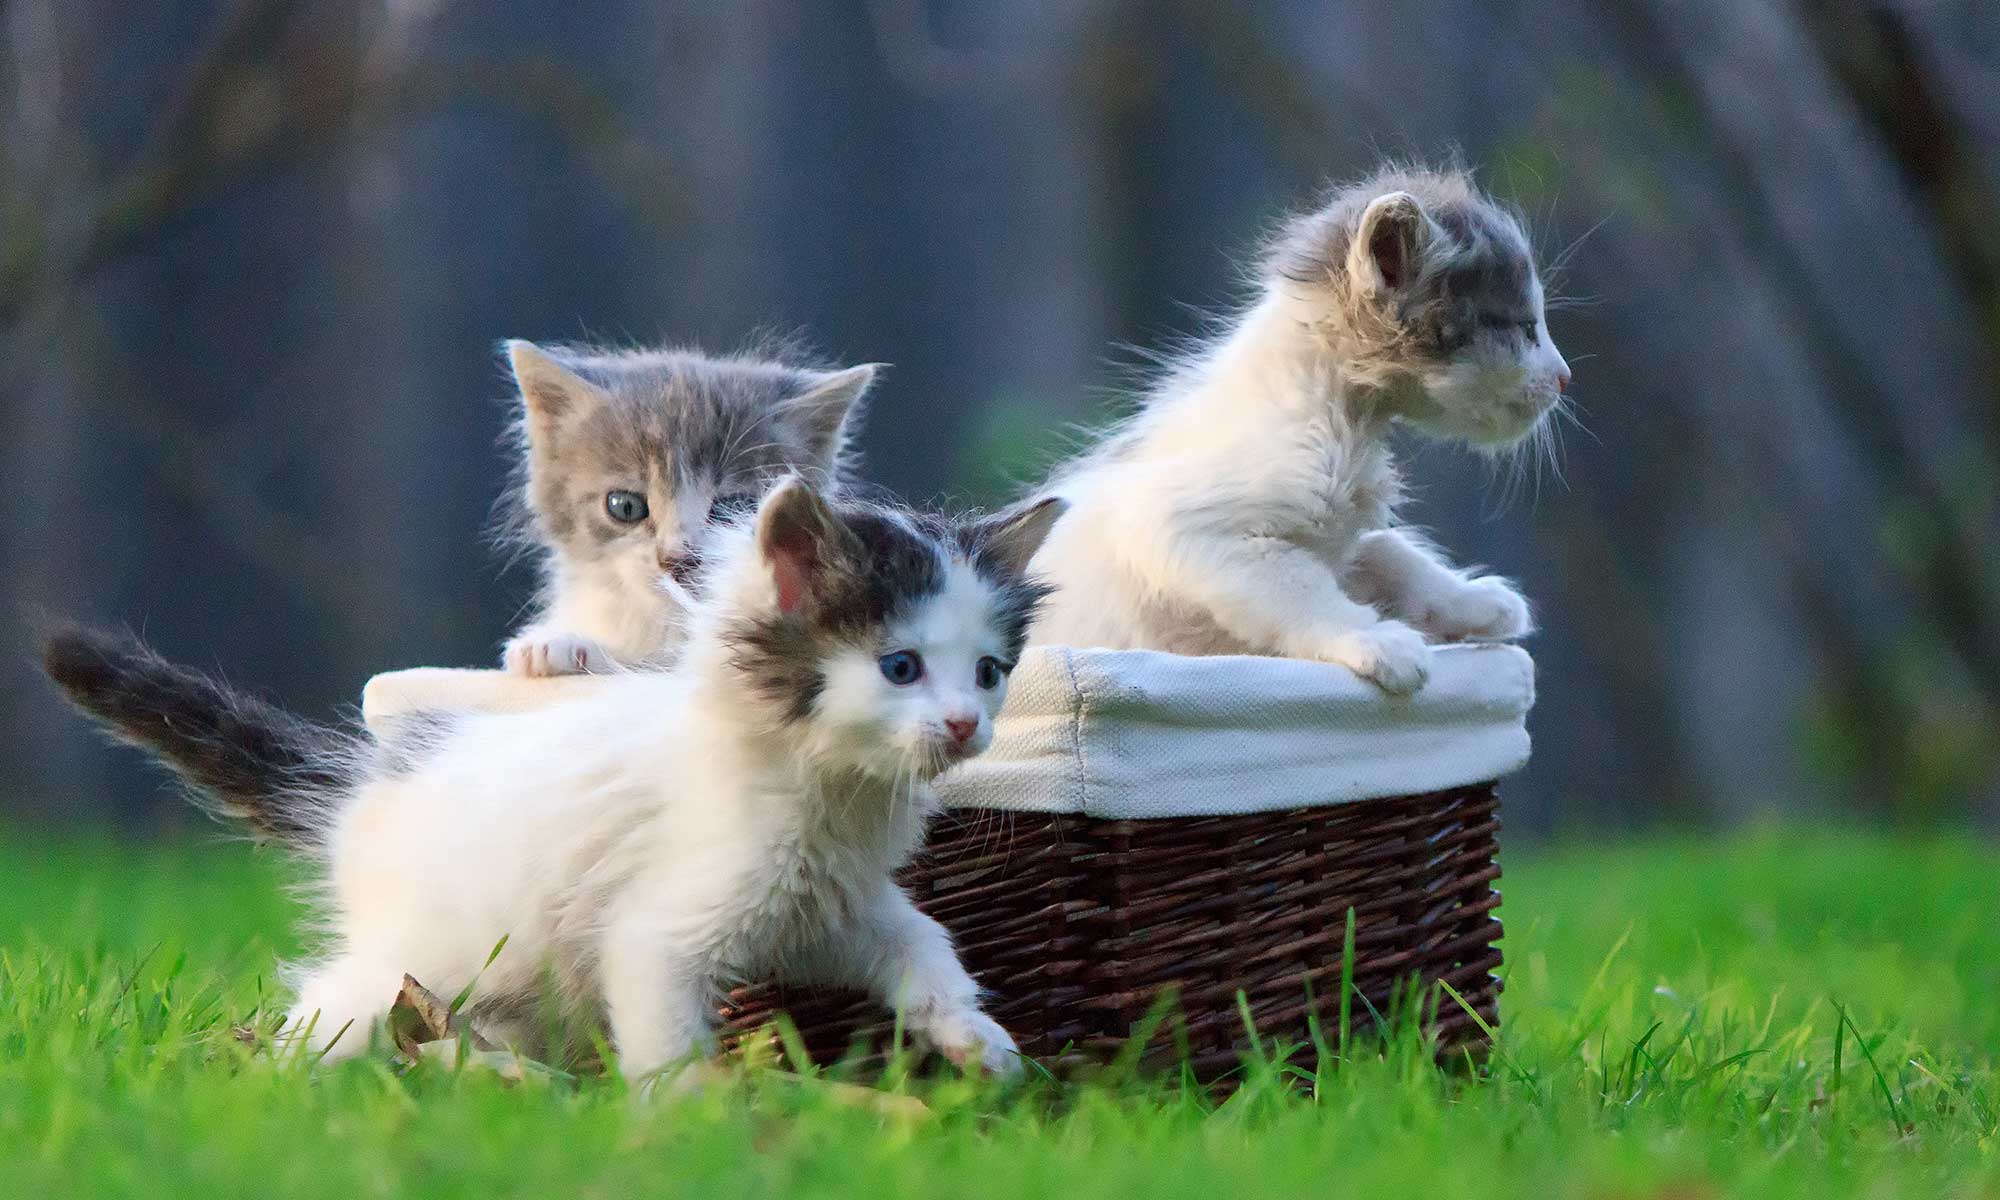 Kittens at a picnic